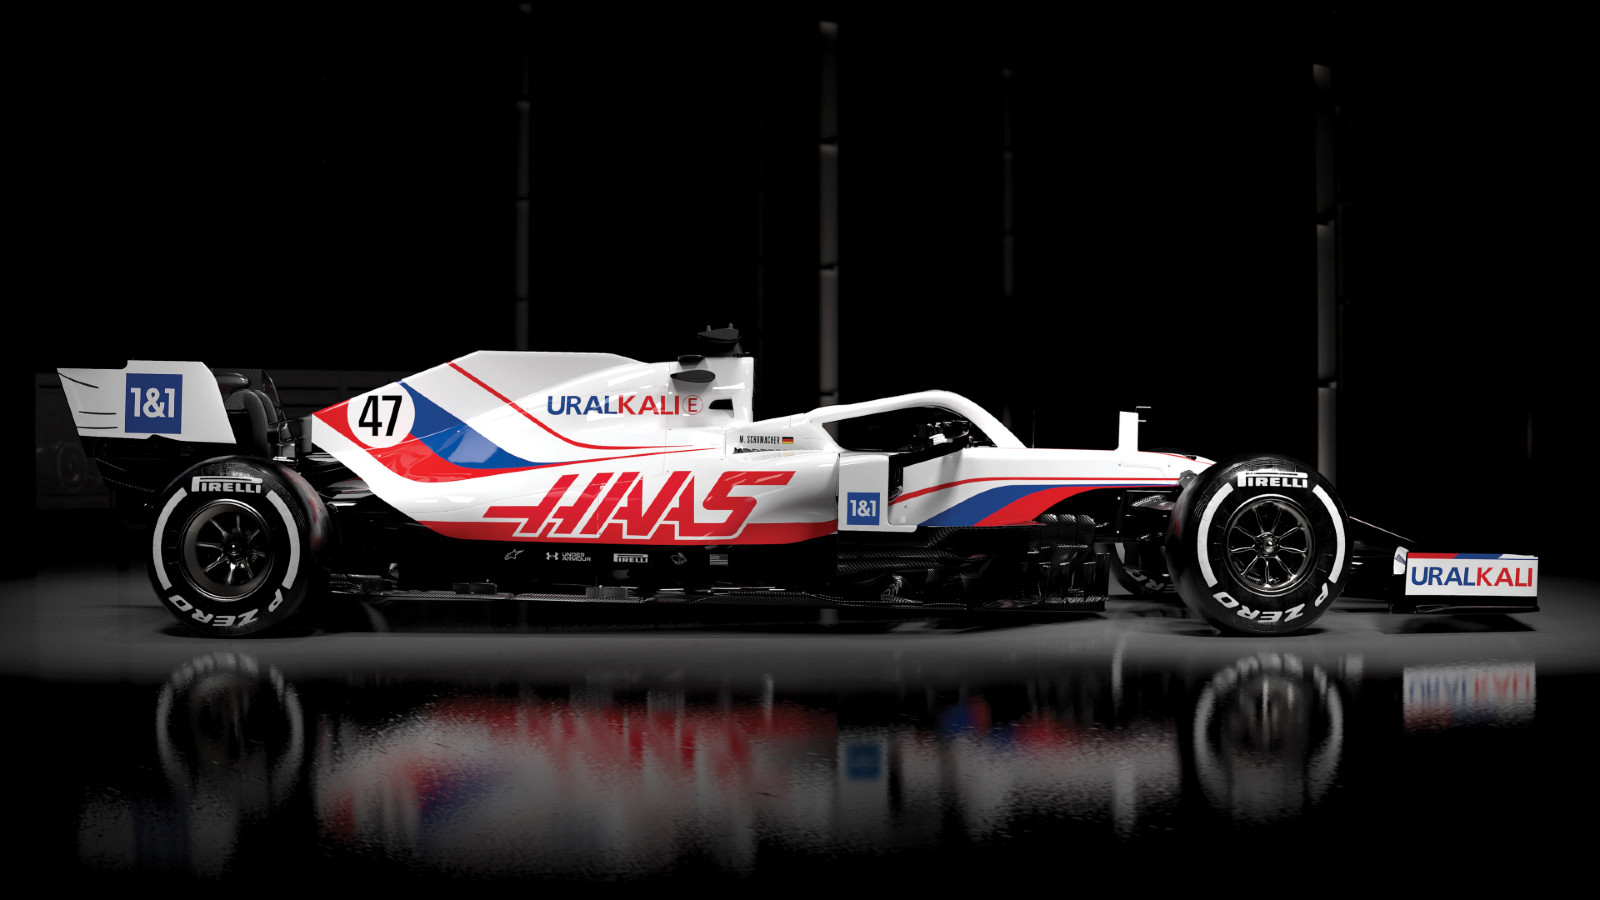 Haas reveal their 2021 Haas VF-21 Uralkali livery